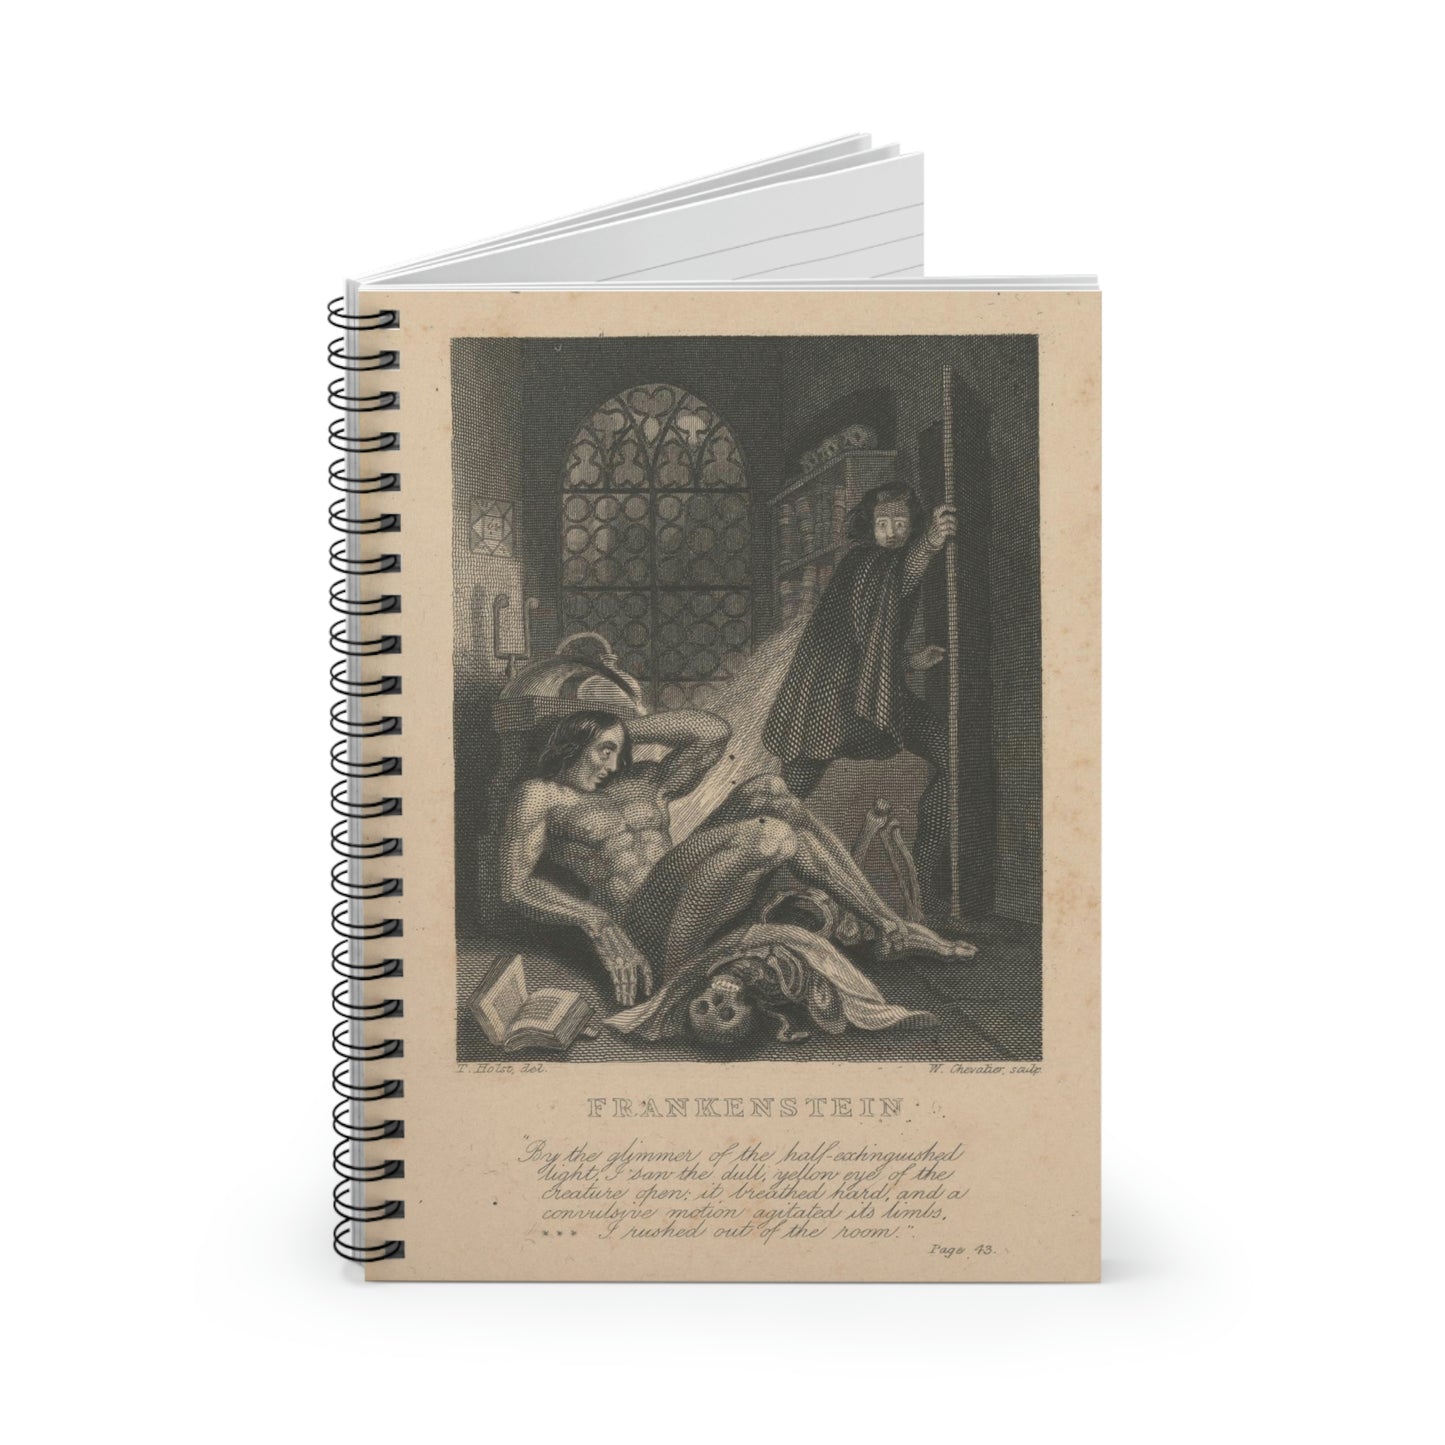 Spiral Notebook Frankenstein Frontispiece Illustration - Ruled Line